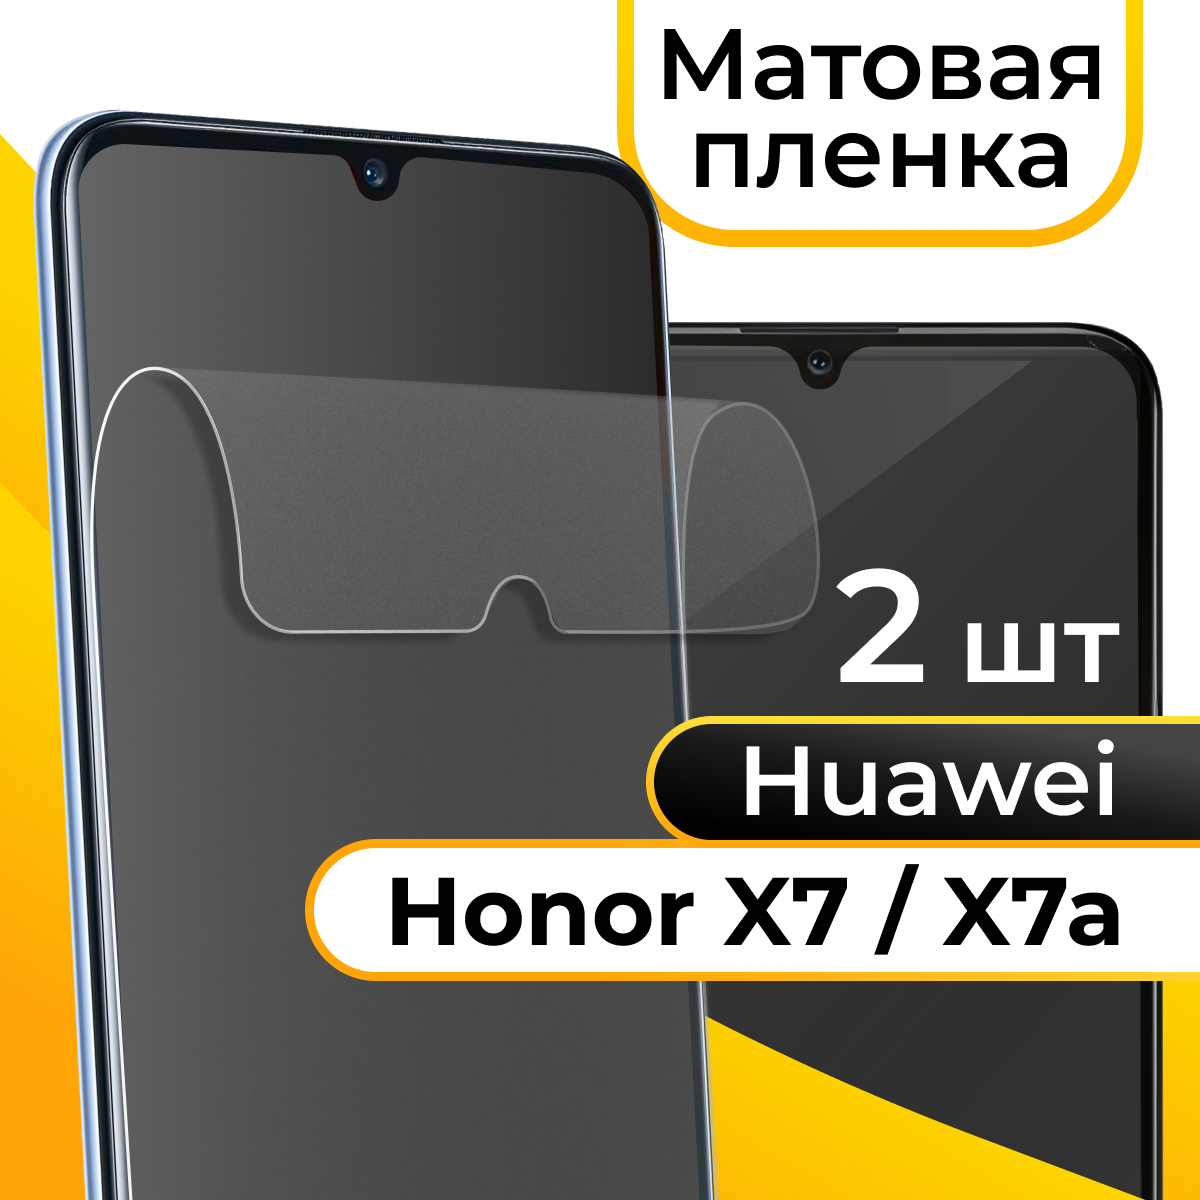 Матовая пленка для смартфона Huawei Honor X7 / Защитная противоударная пленка на телефон Хуавей Хонор Х7 / Гидрогелевая самовосстанавливающаяся пленка